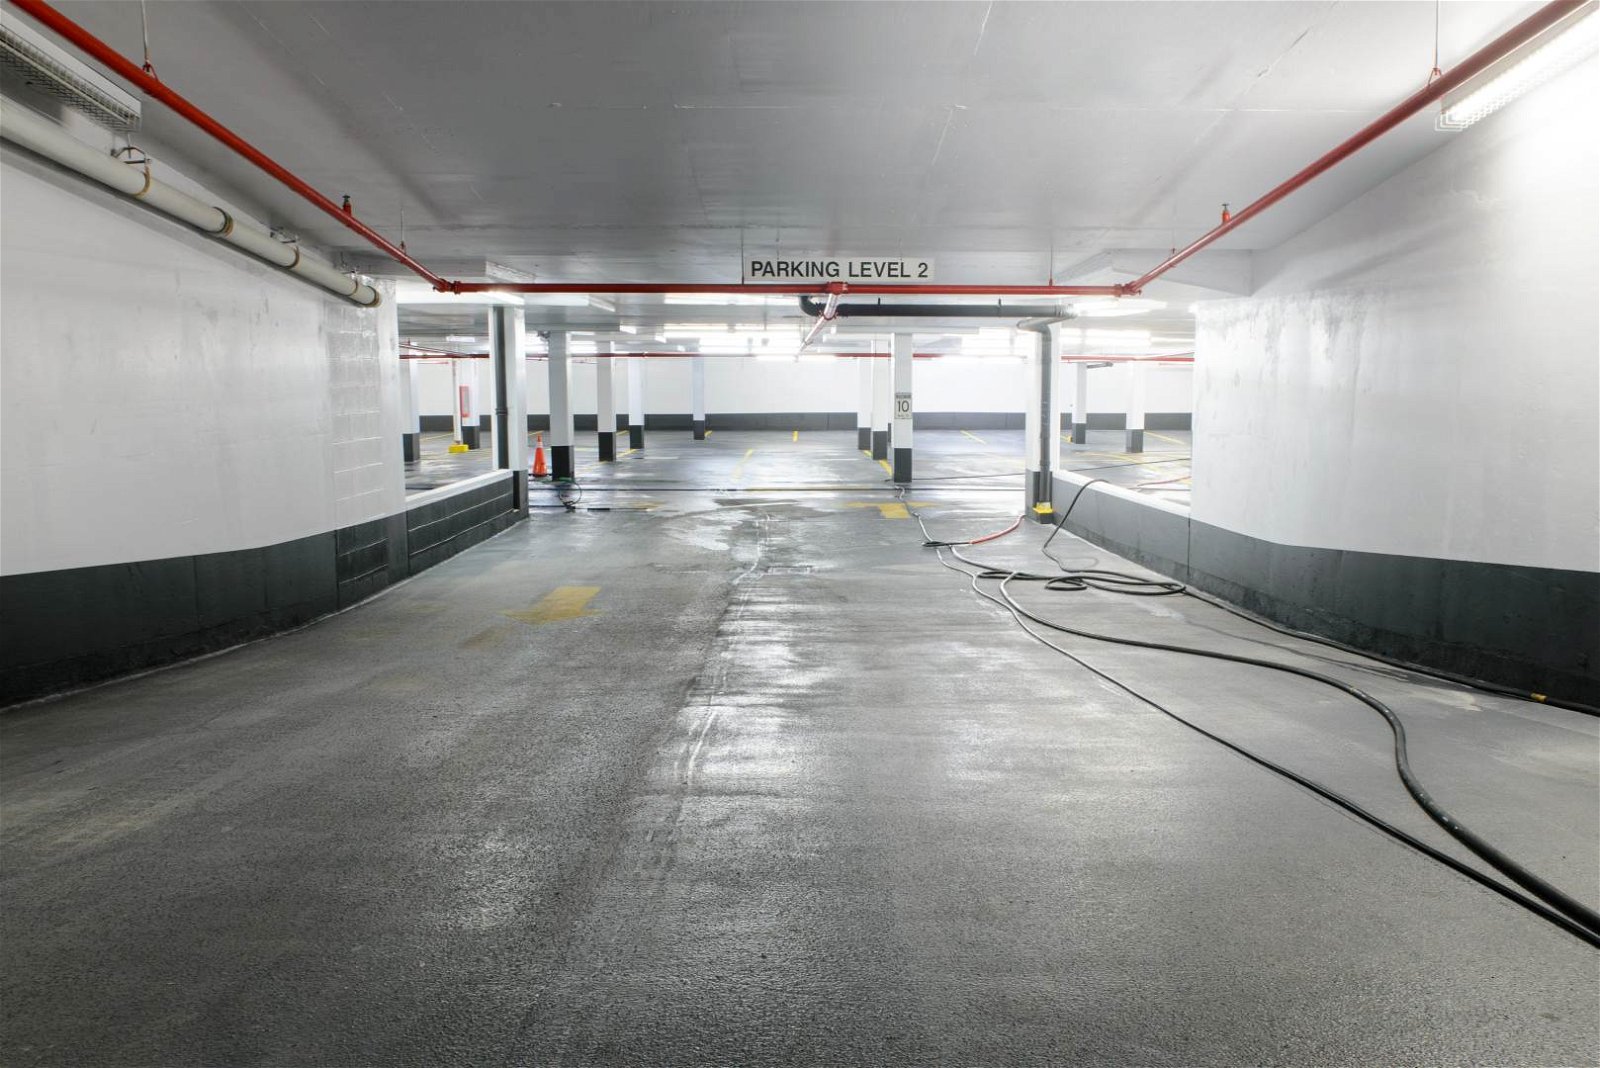 The Boulevard Parking Garage Rehabilitation